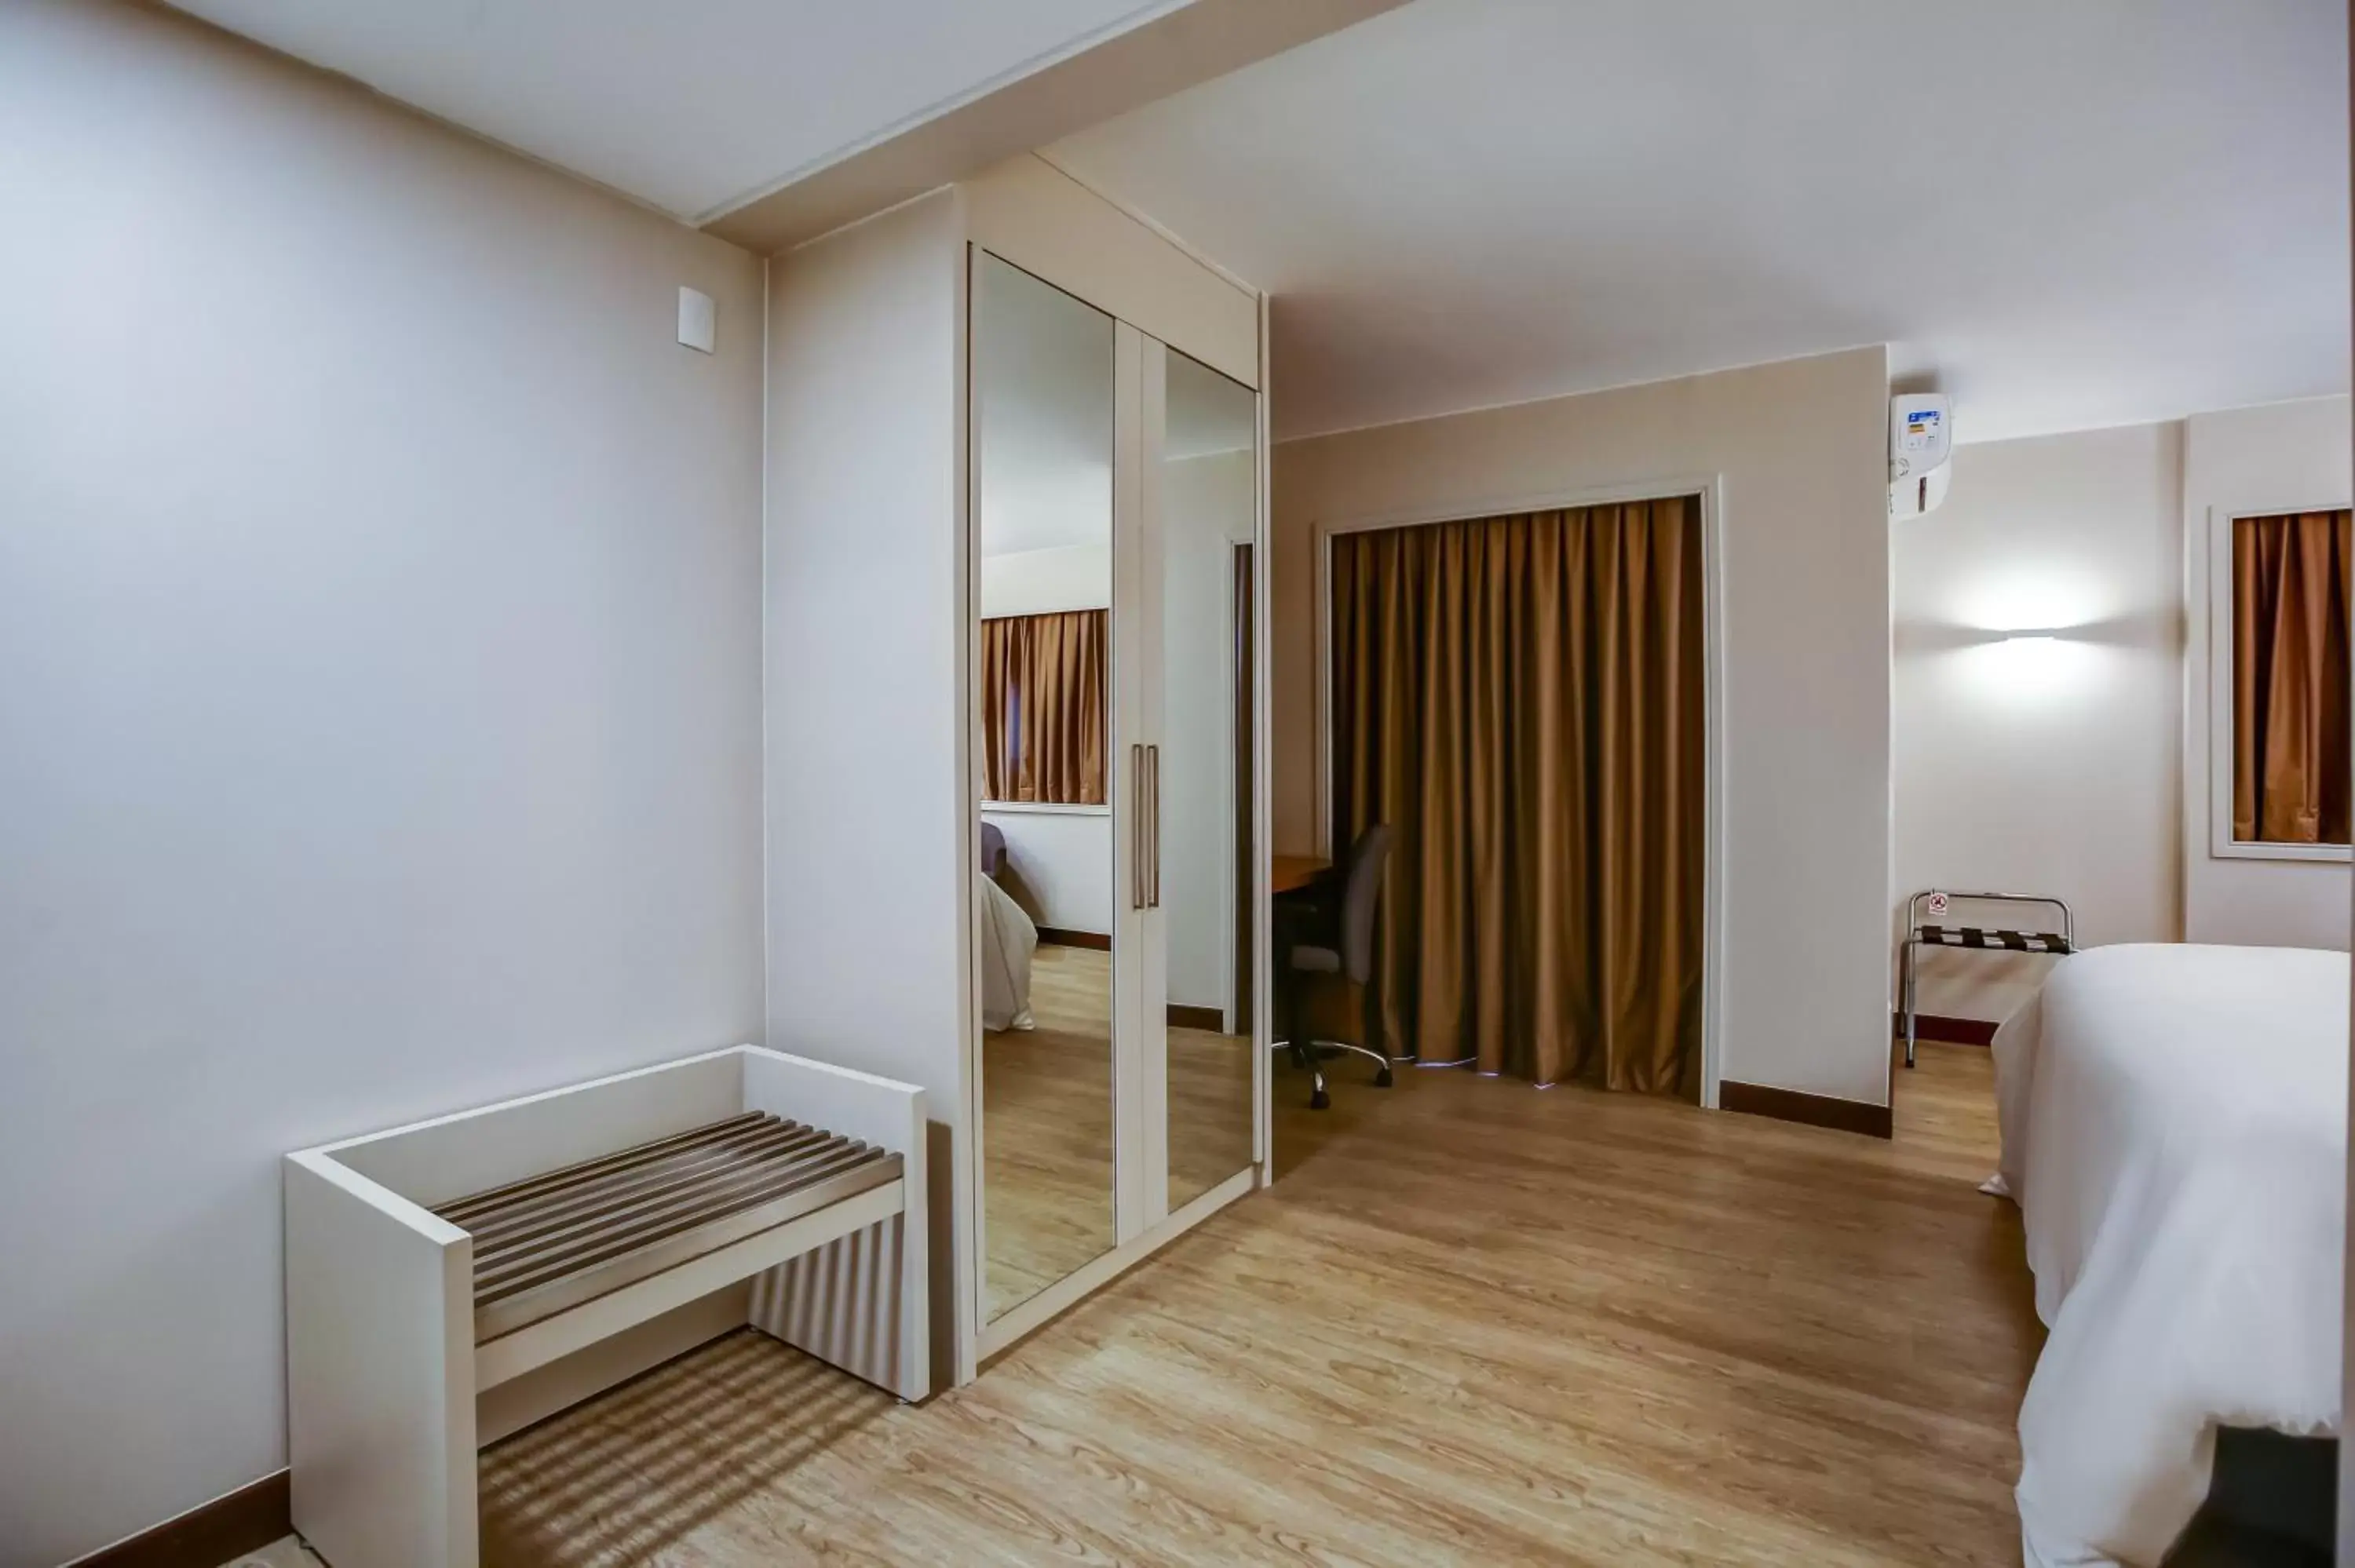 Area and facilities in Comfort Suites Brasília